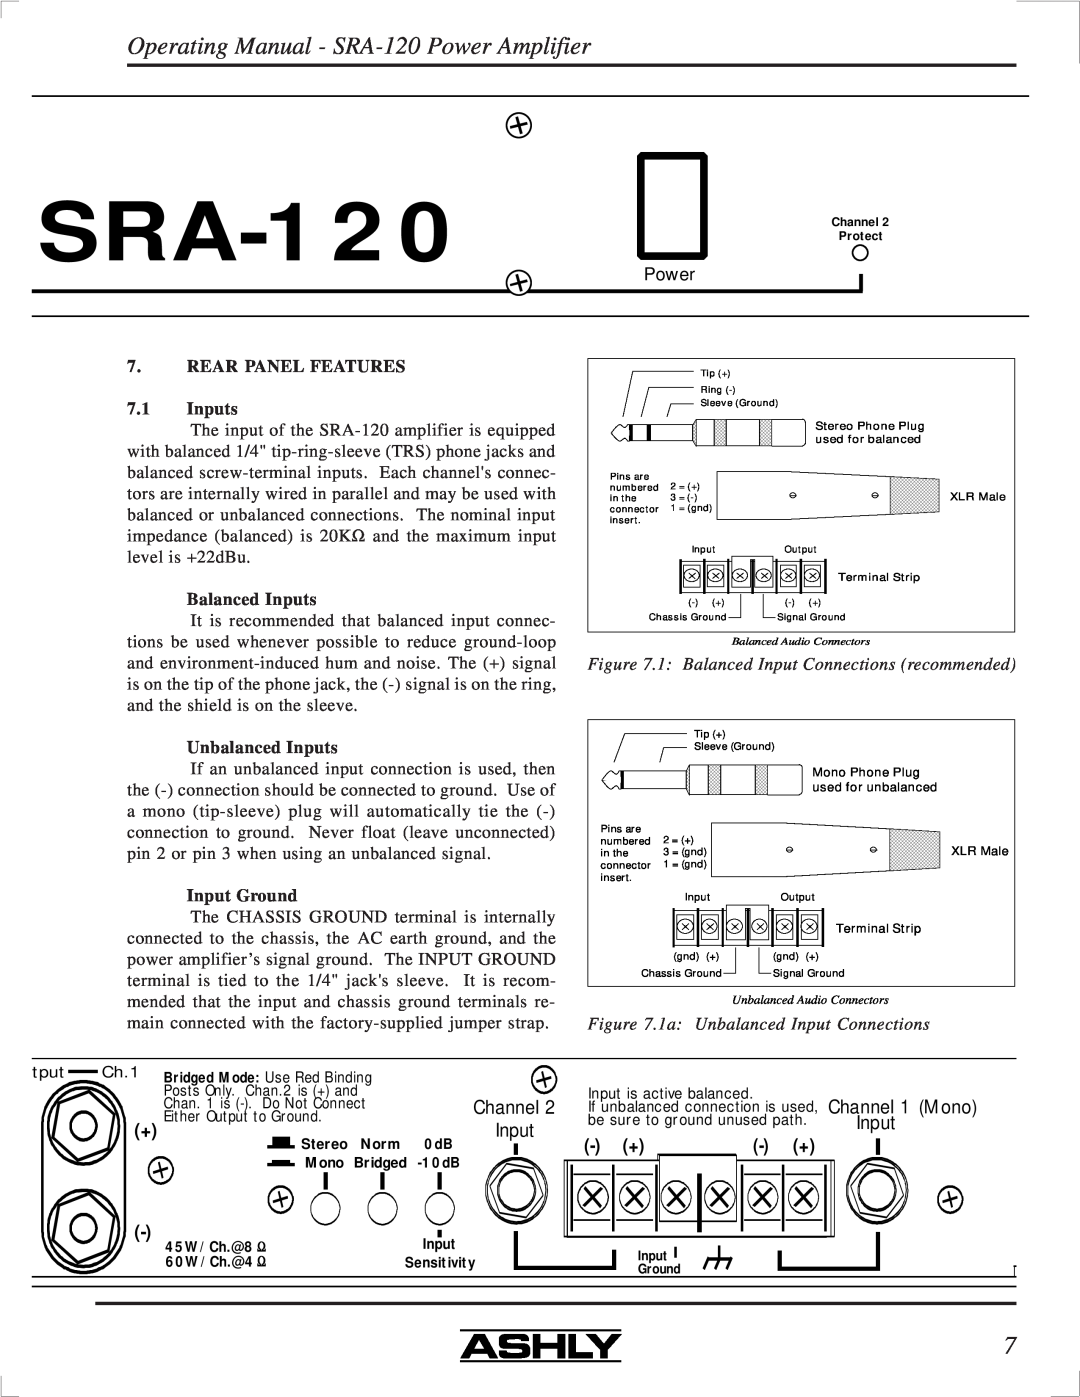 Ashly Operating Manual - SRA-120Power Amplifier, REAR PANEL FEATURES 7.1Inputs, Balanced Inputs, Unbalanced Inputs 